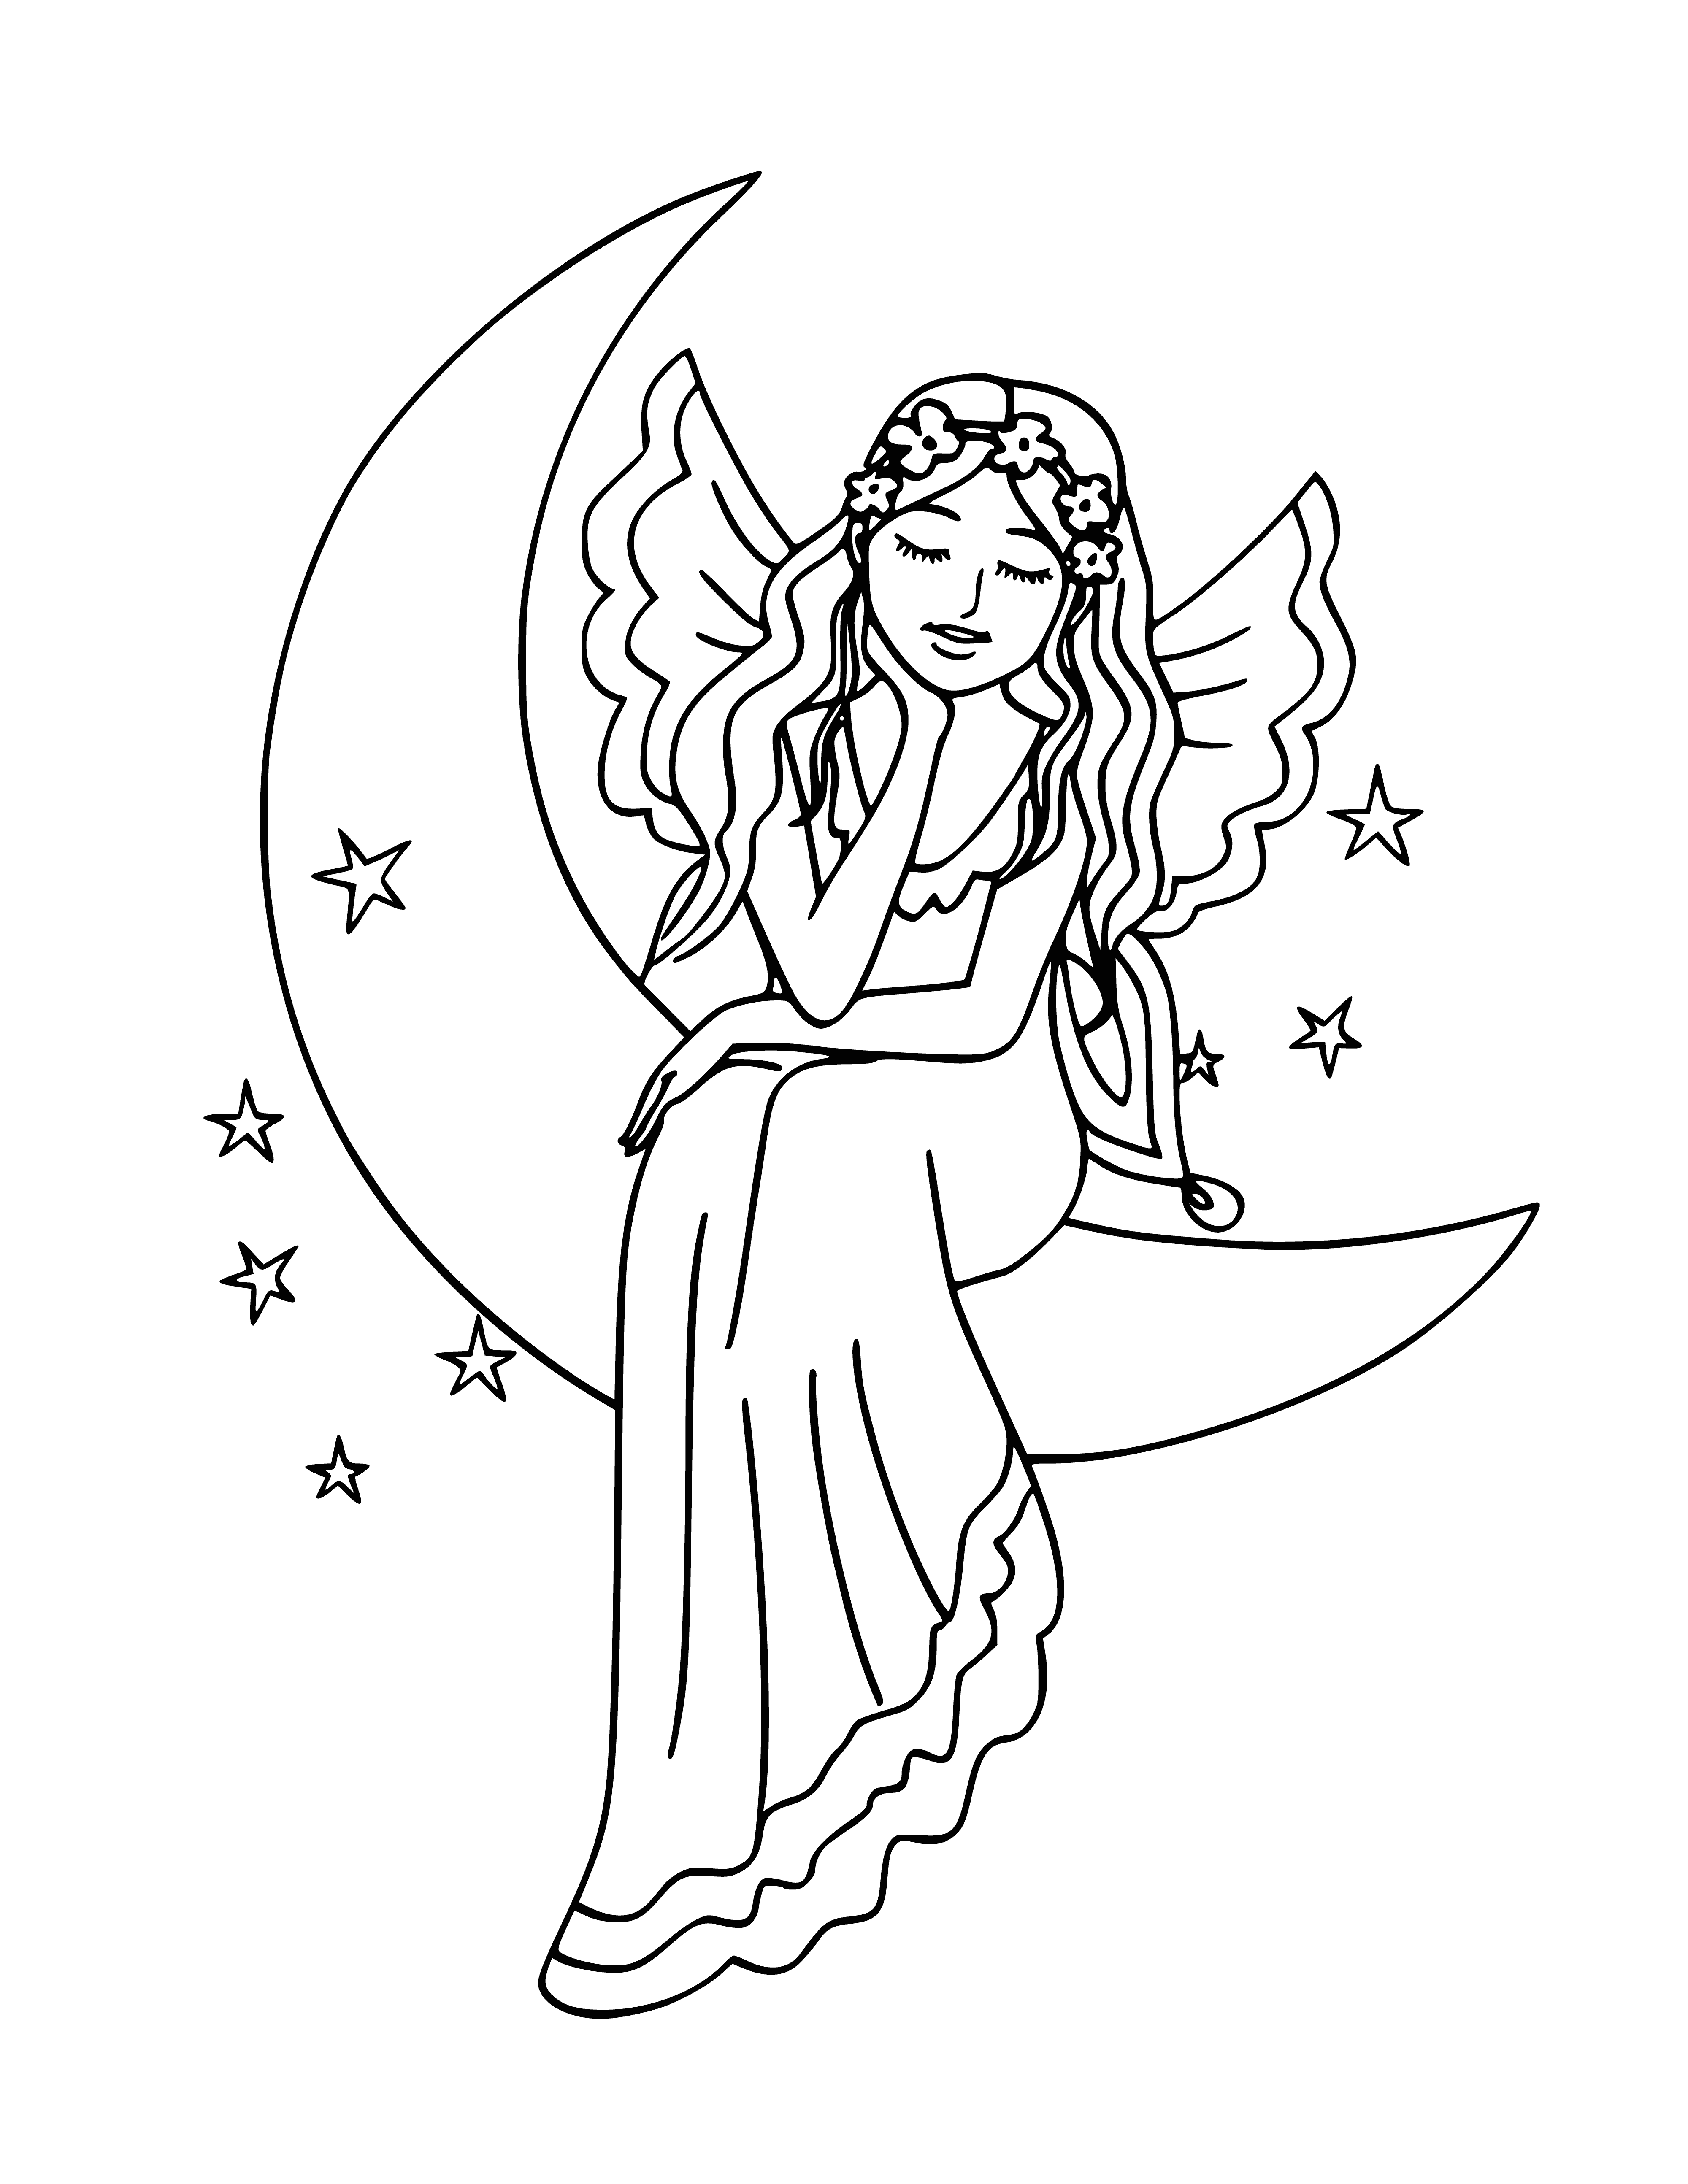 Fairy of dreams coloring page